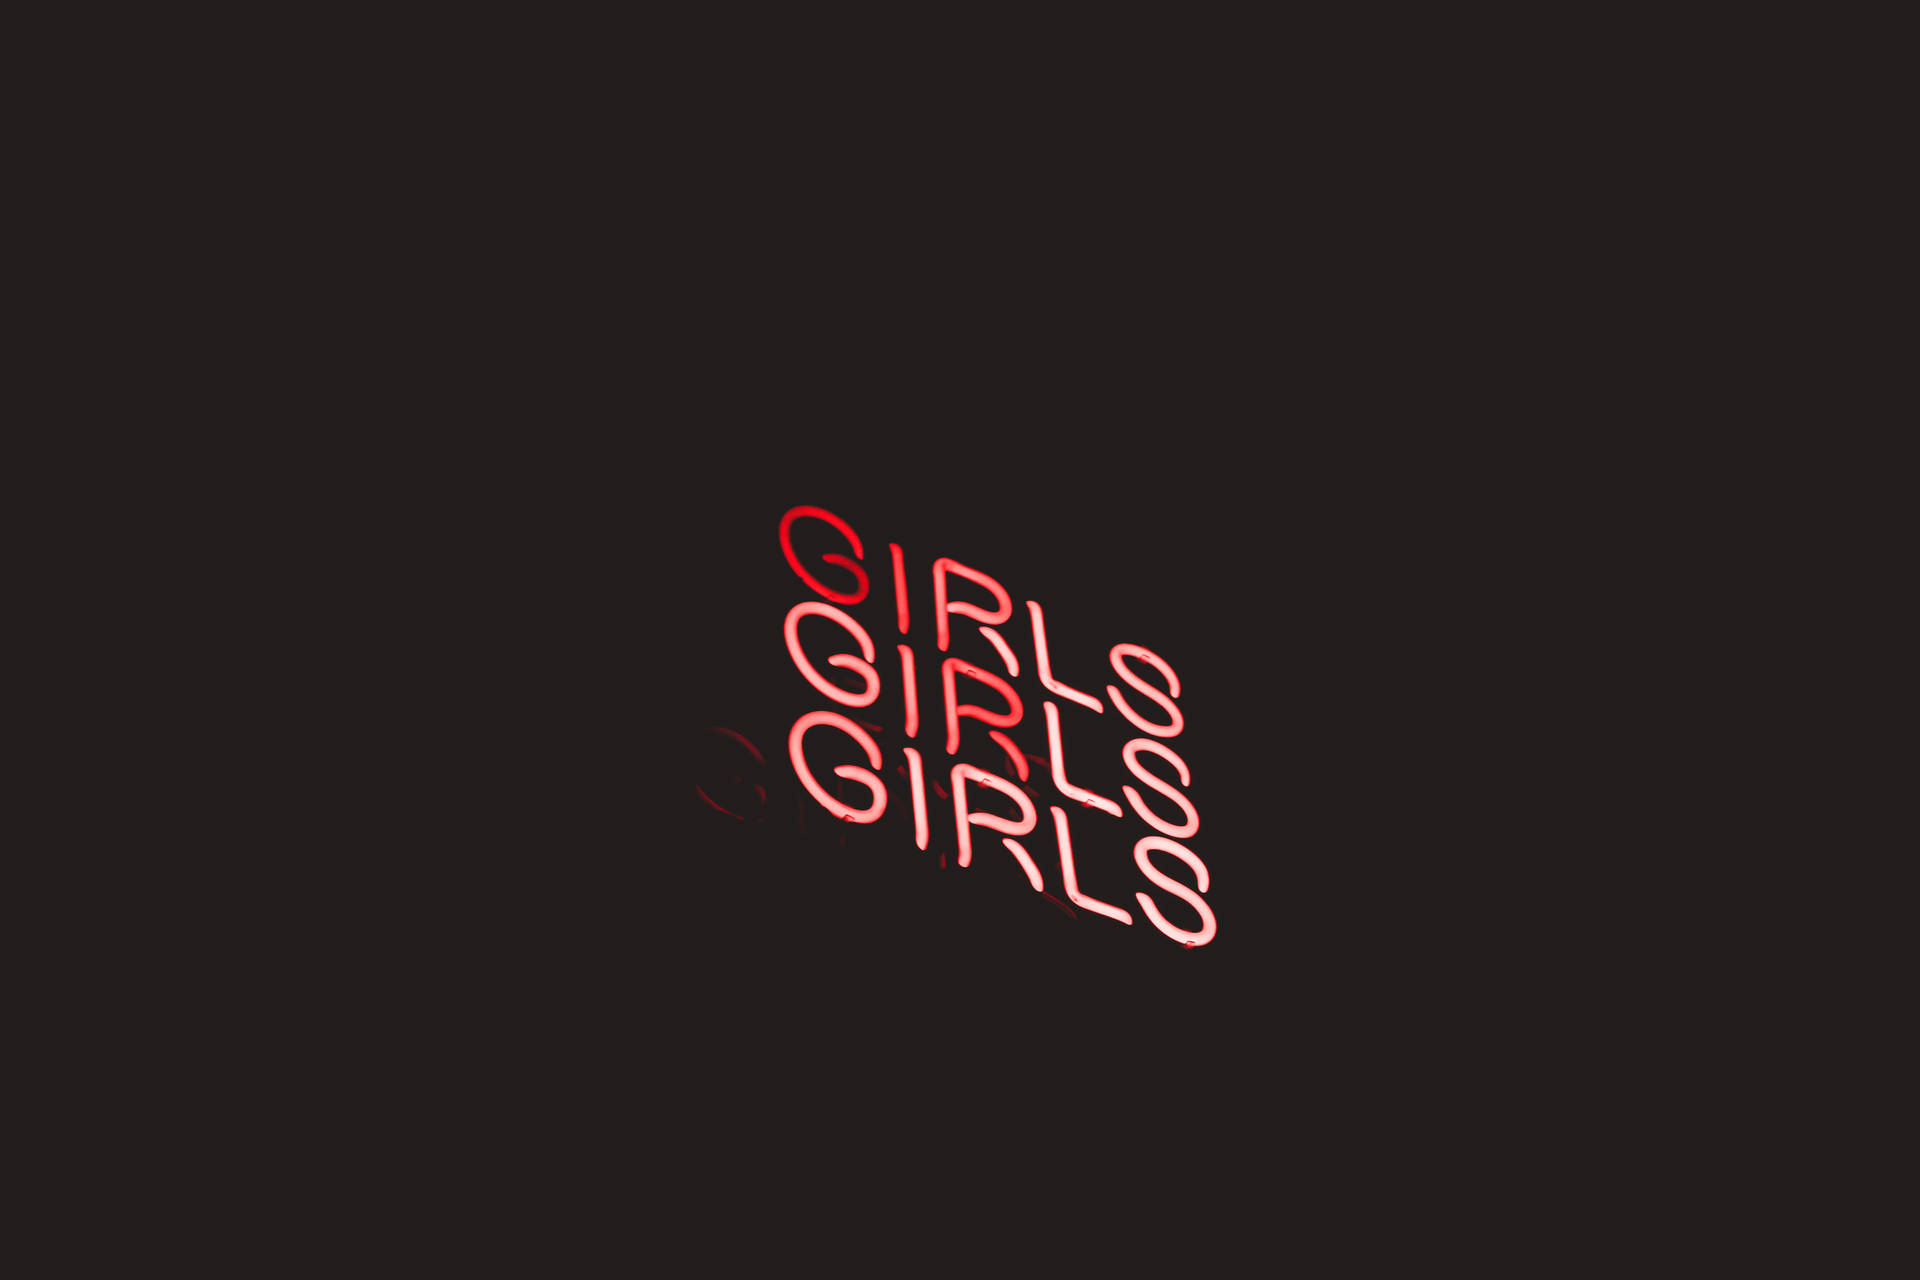 Girls Girls Girls Neon Sign Wallpaper